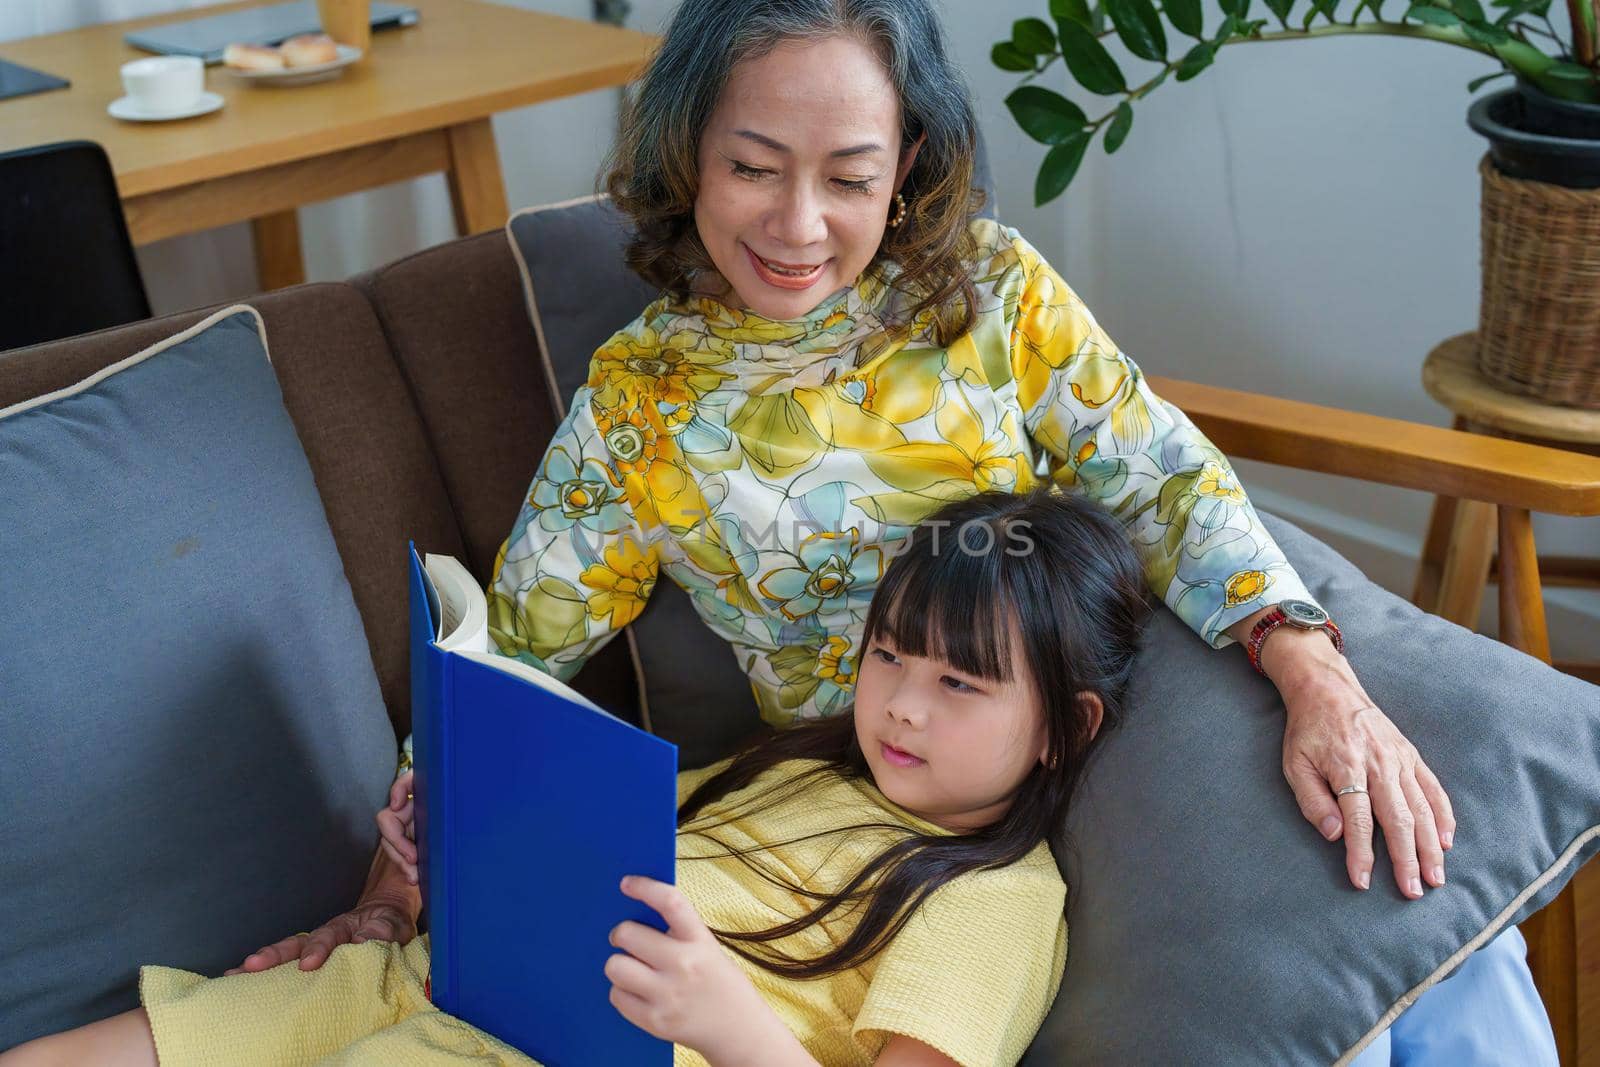 Asian portrait, grandchild granddaughter grandma grandmother and granddaughter happily join in activities to enhance skills for grandchildren.